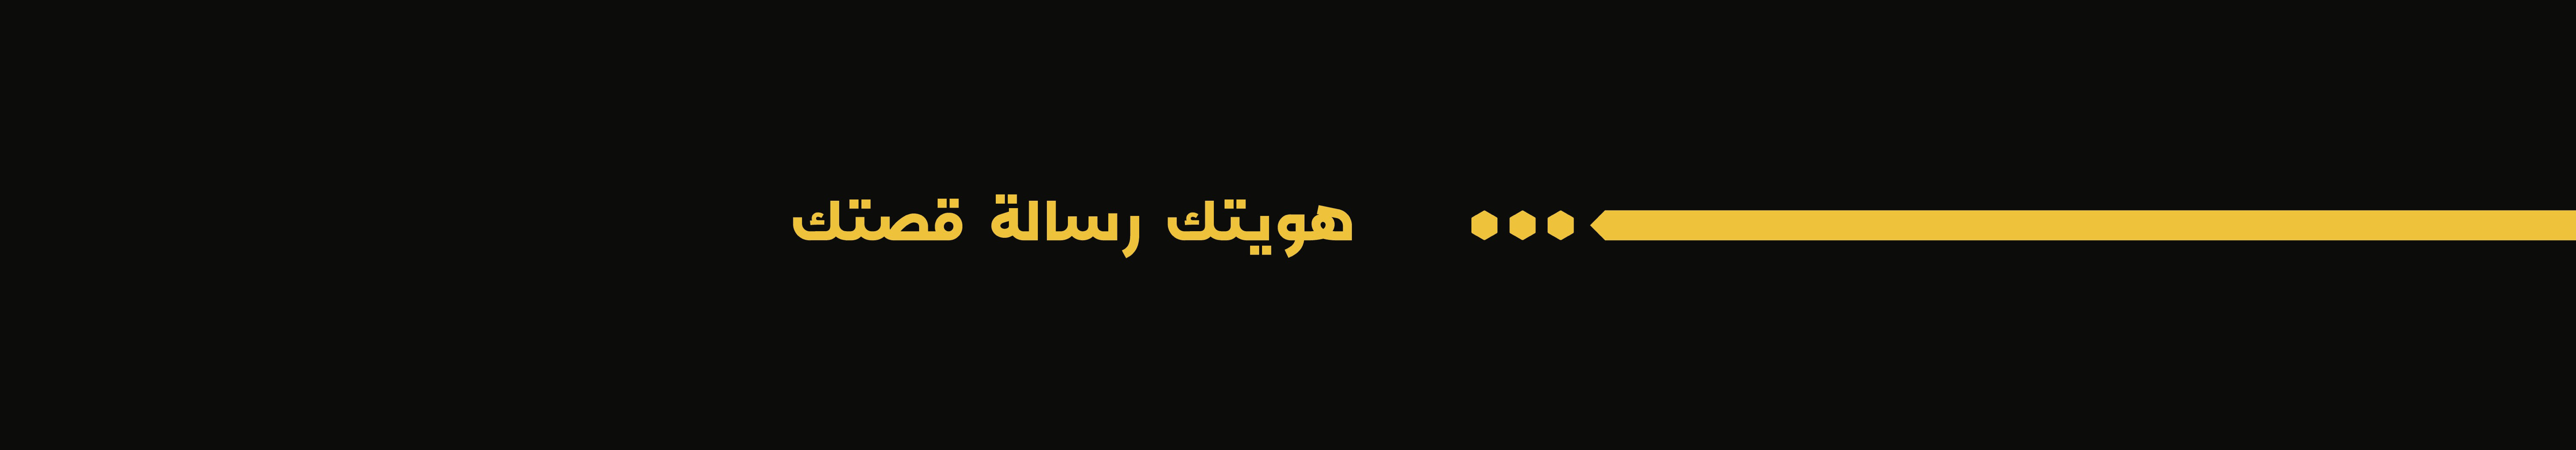 SHAHAD SHAKER's profile banner